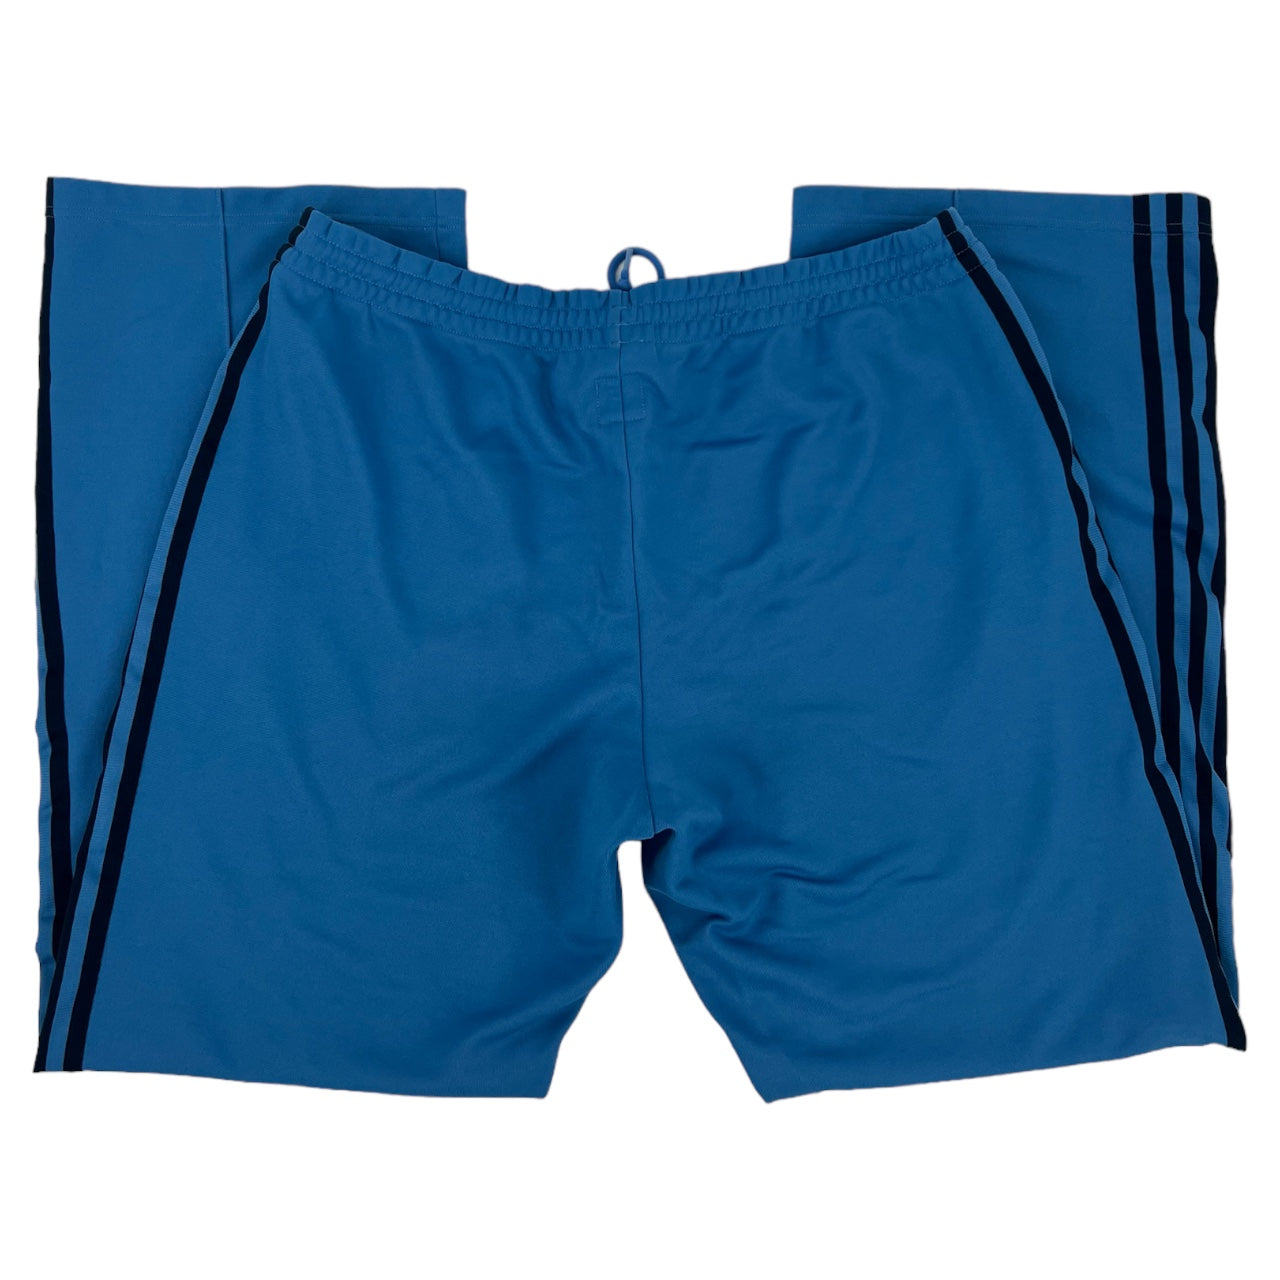 Y2K Blue / Navy Blue Adidas Trackpants Sz: L